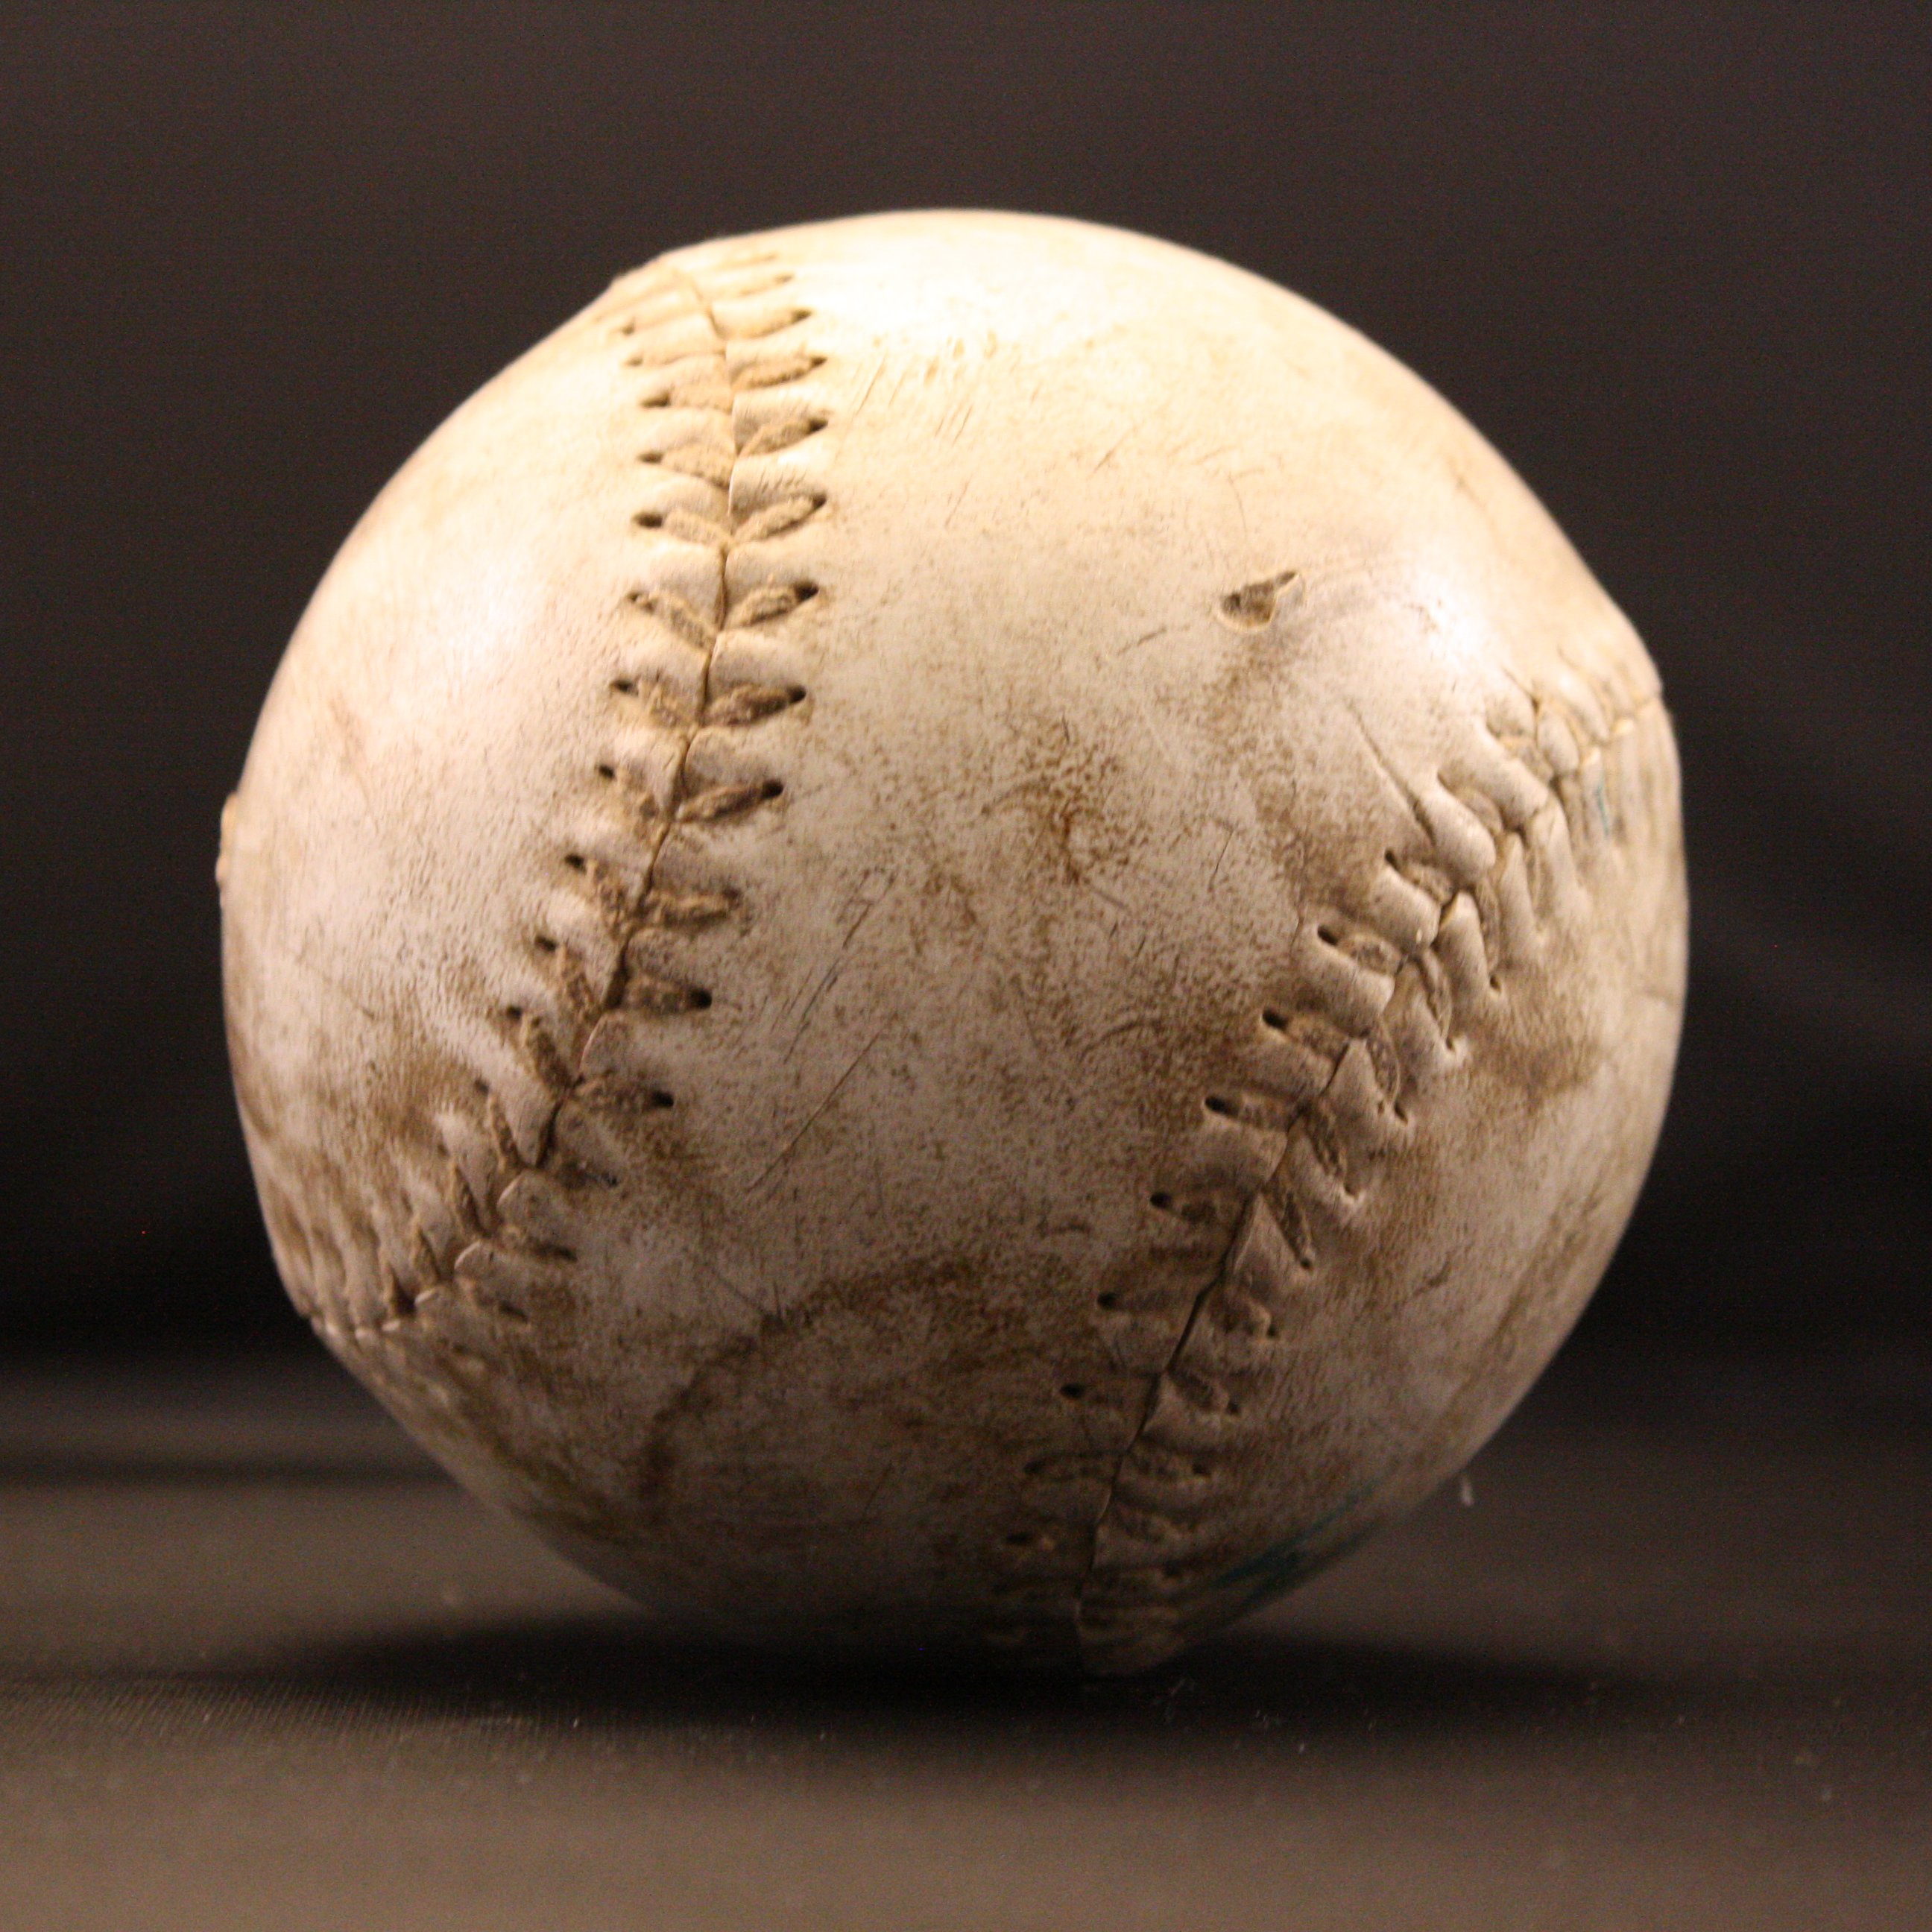 Baseball ball. Софтбольный мяч. Бейсбольный и софтбольный мяч. MLS 1980 Baltimore мяч бейсбольный. Мяч для бейсбола.